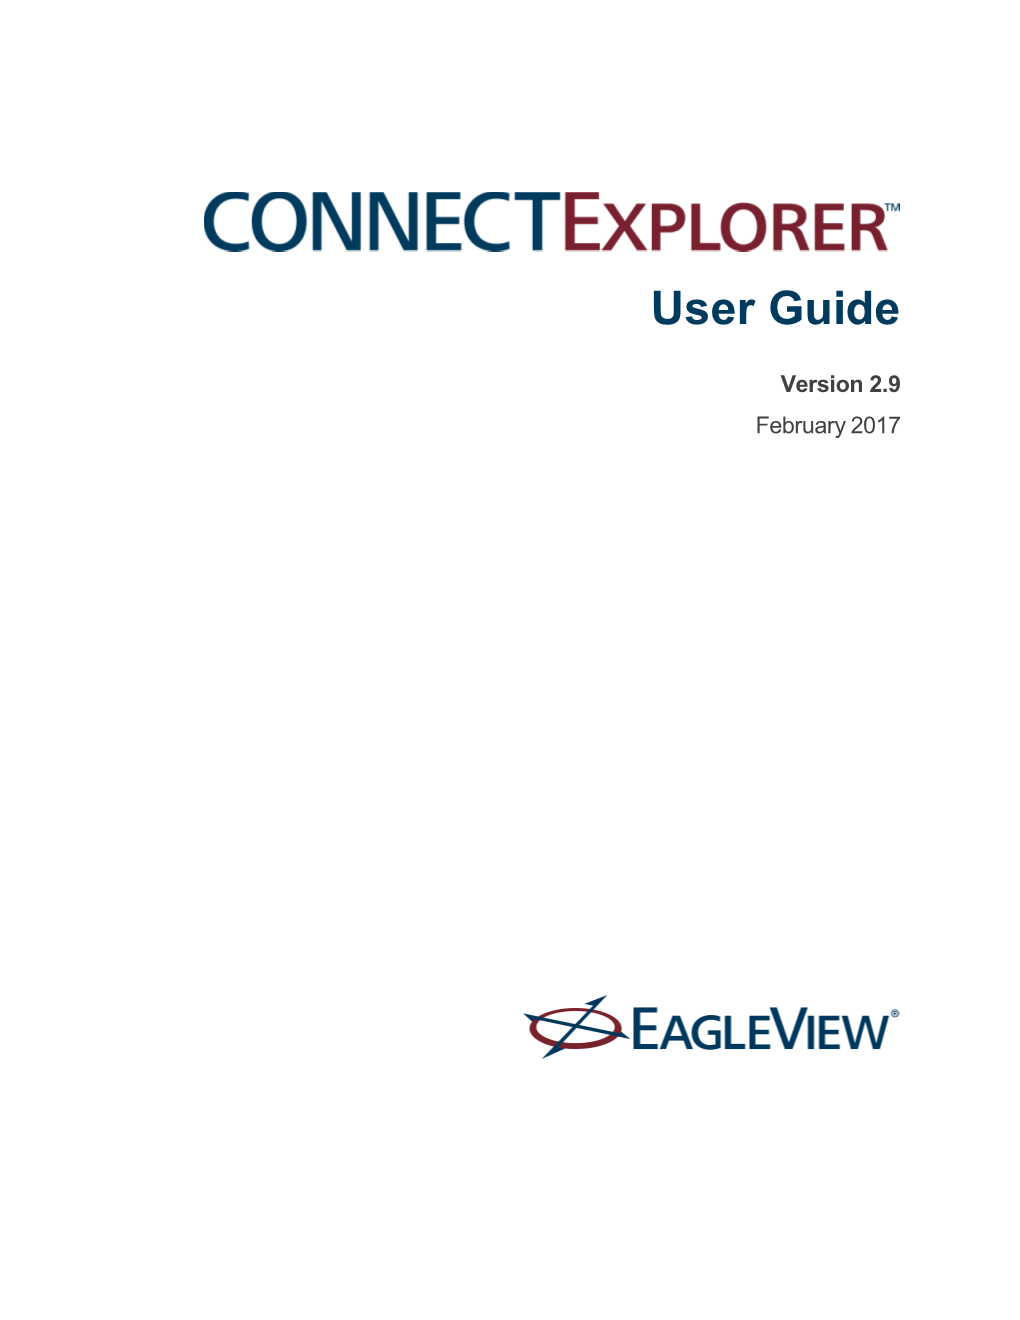 Eagleview Connectexplorer User Guide